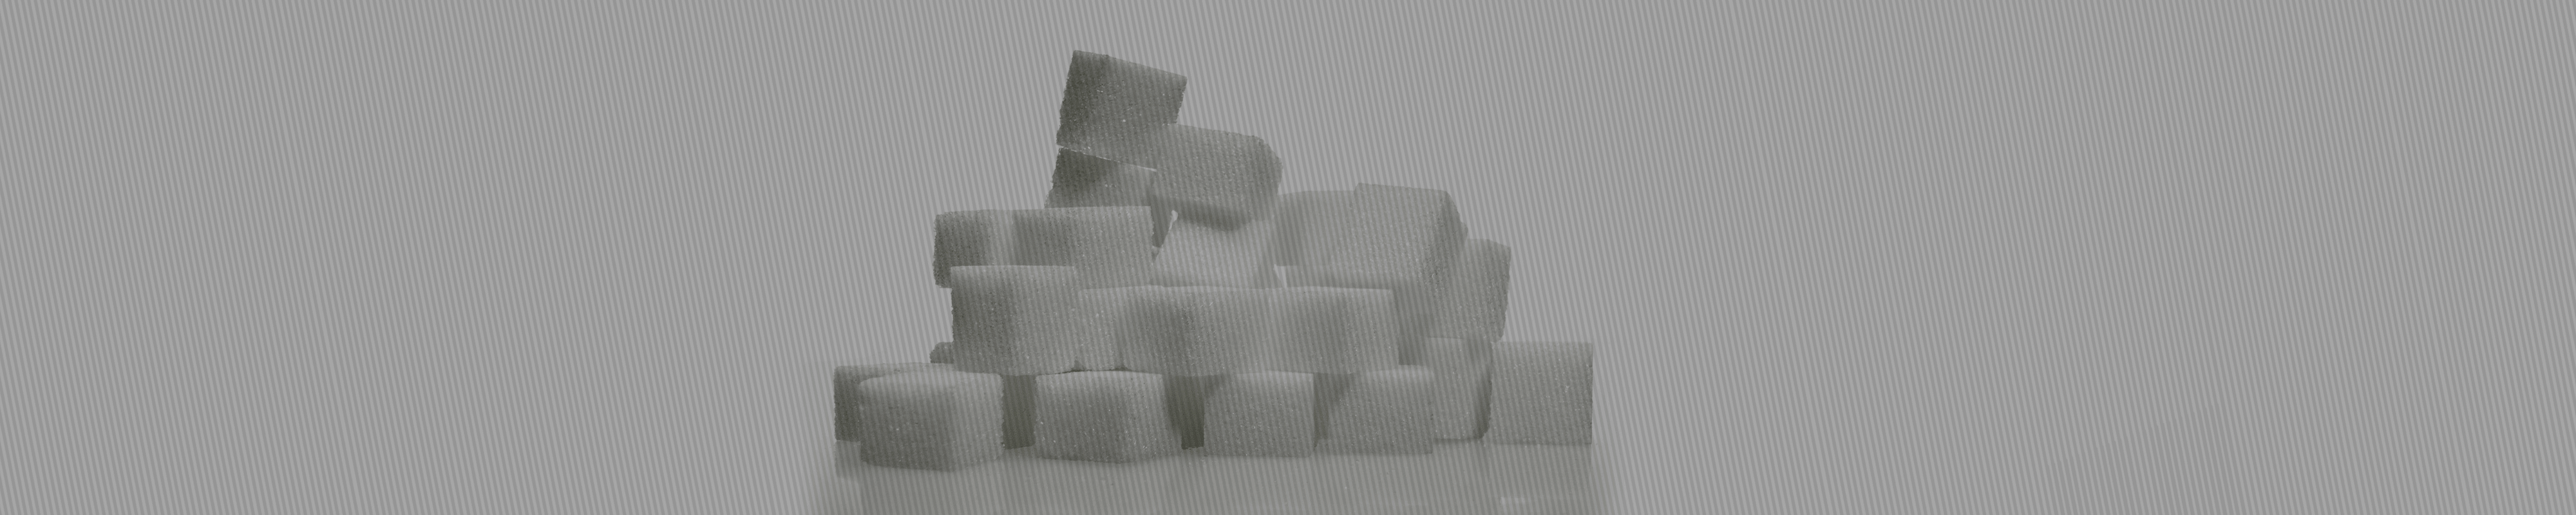 sugar banner - Sugar Intolerance